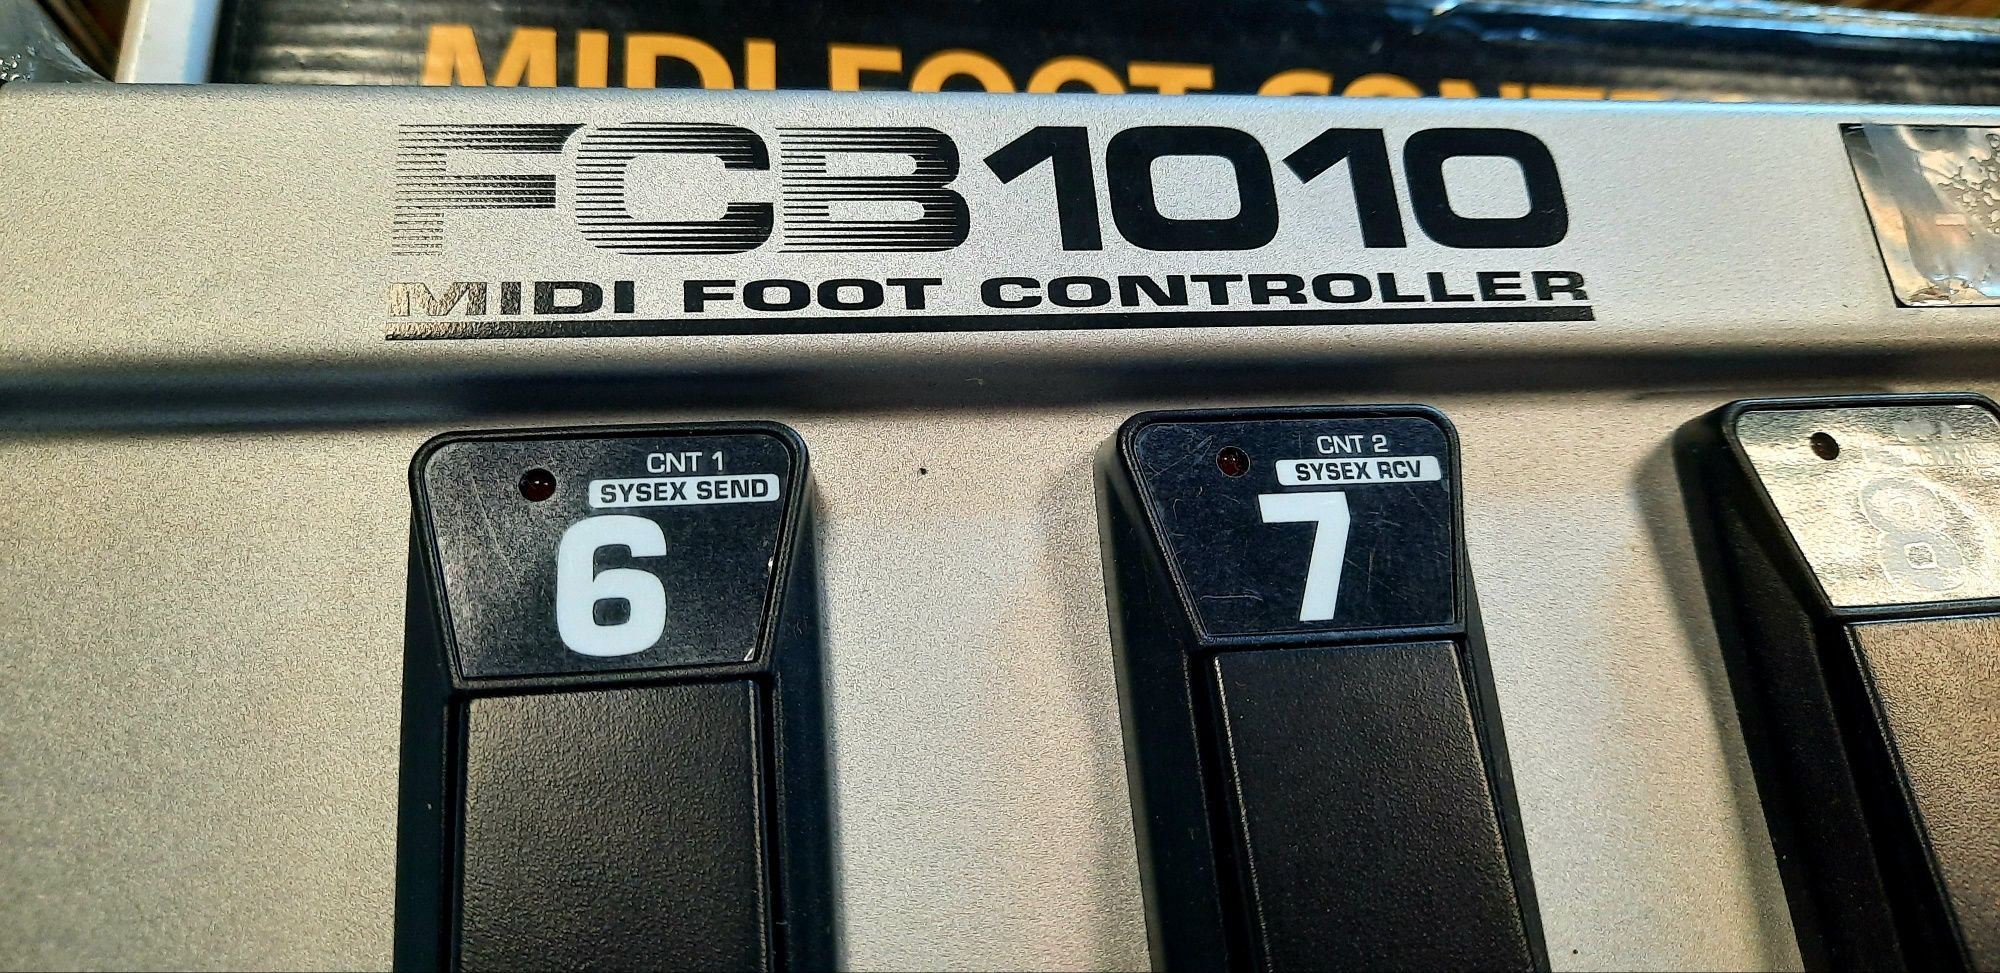 Midi foot Controller FCB 1010 Behringer